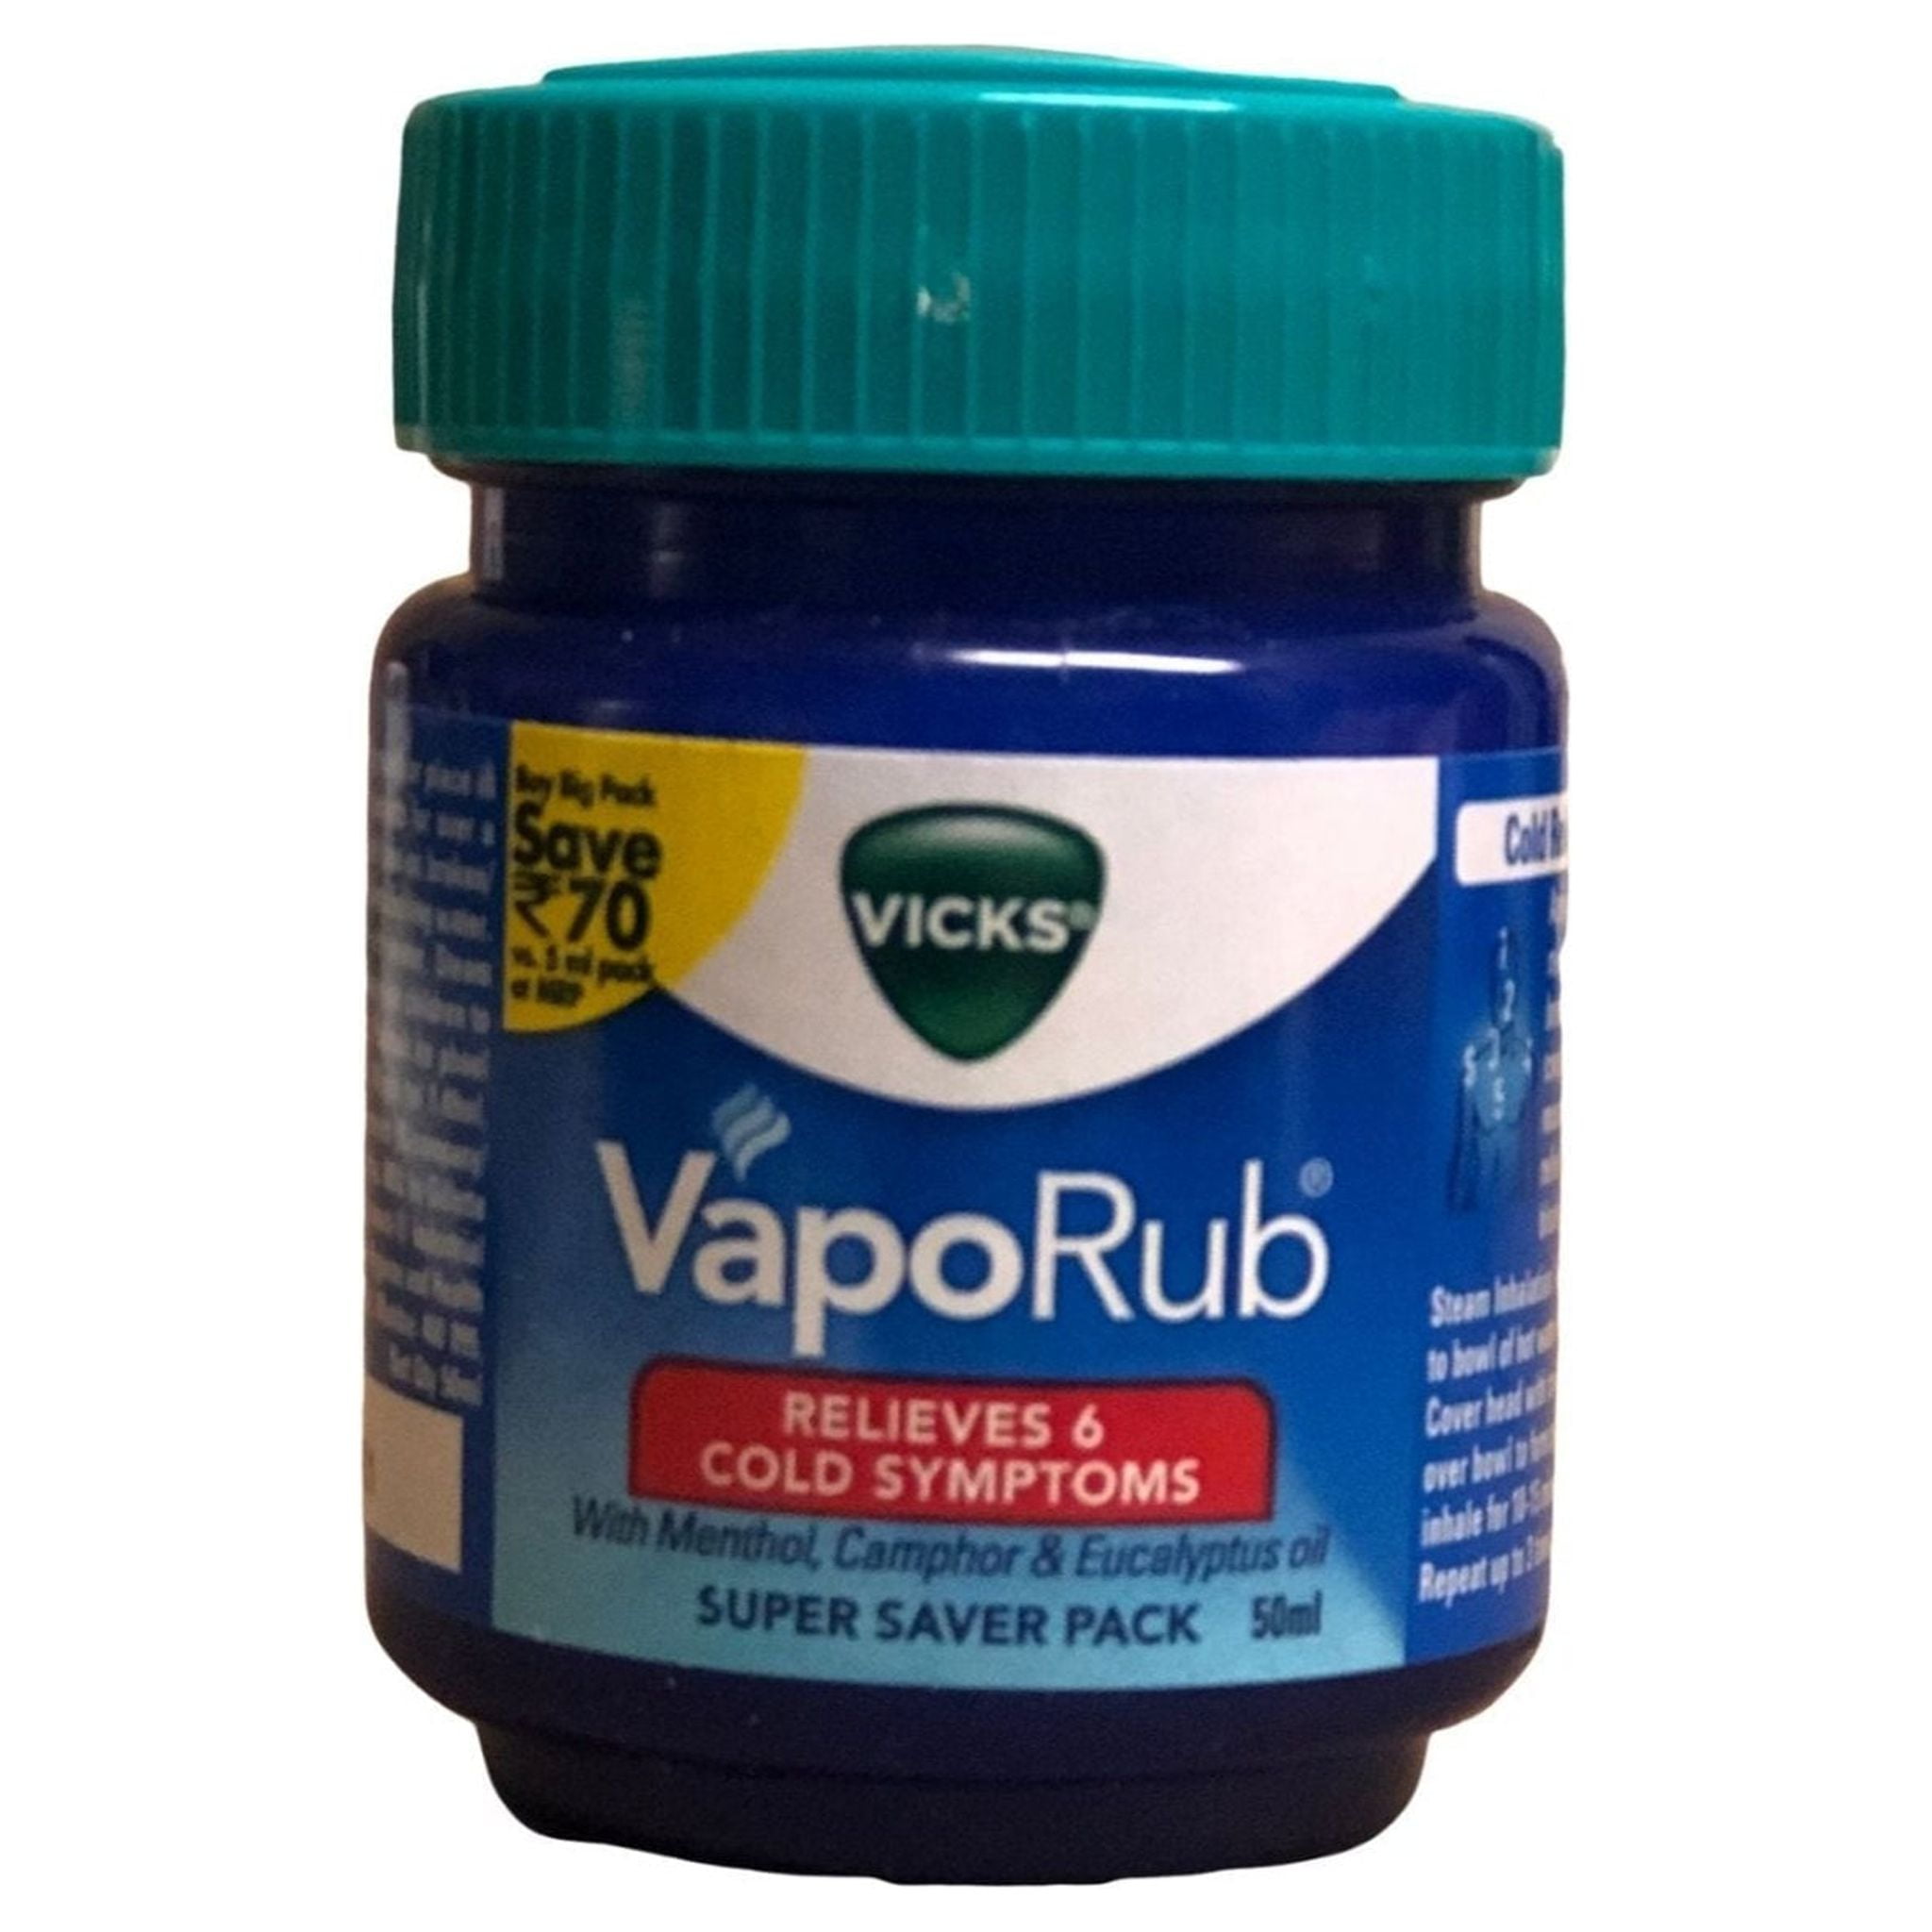 Vicks VapoRub Relieves 6 Cold Symptoms 50ml (1.69oz) 